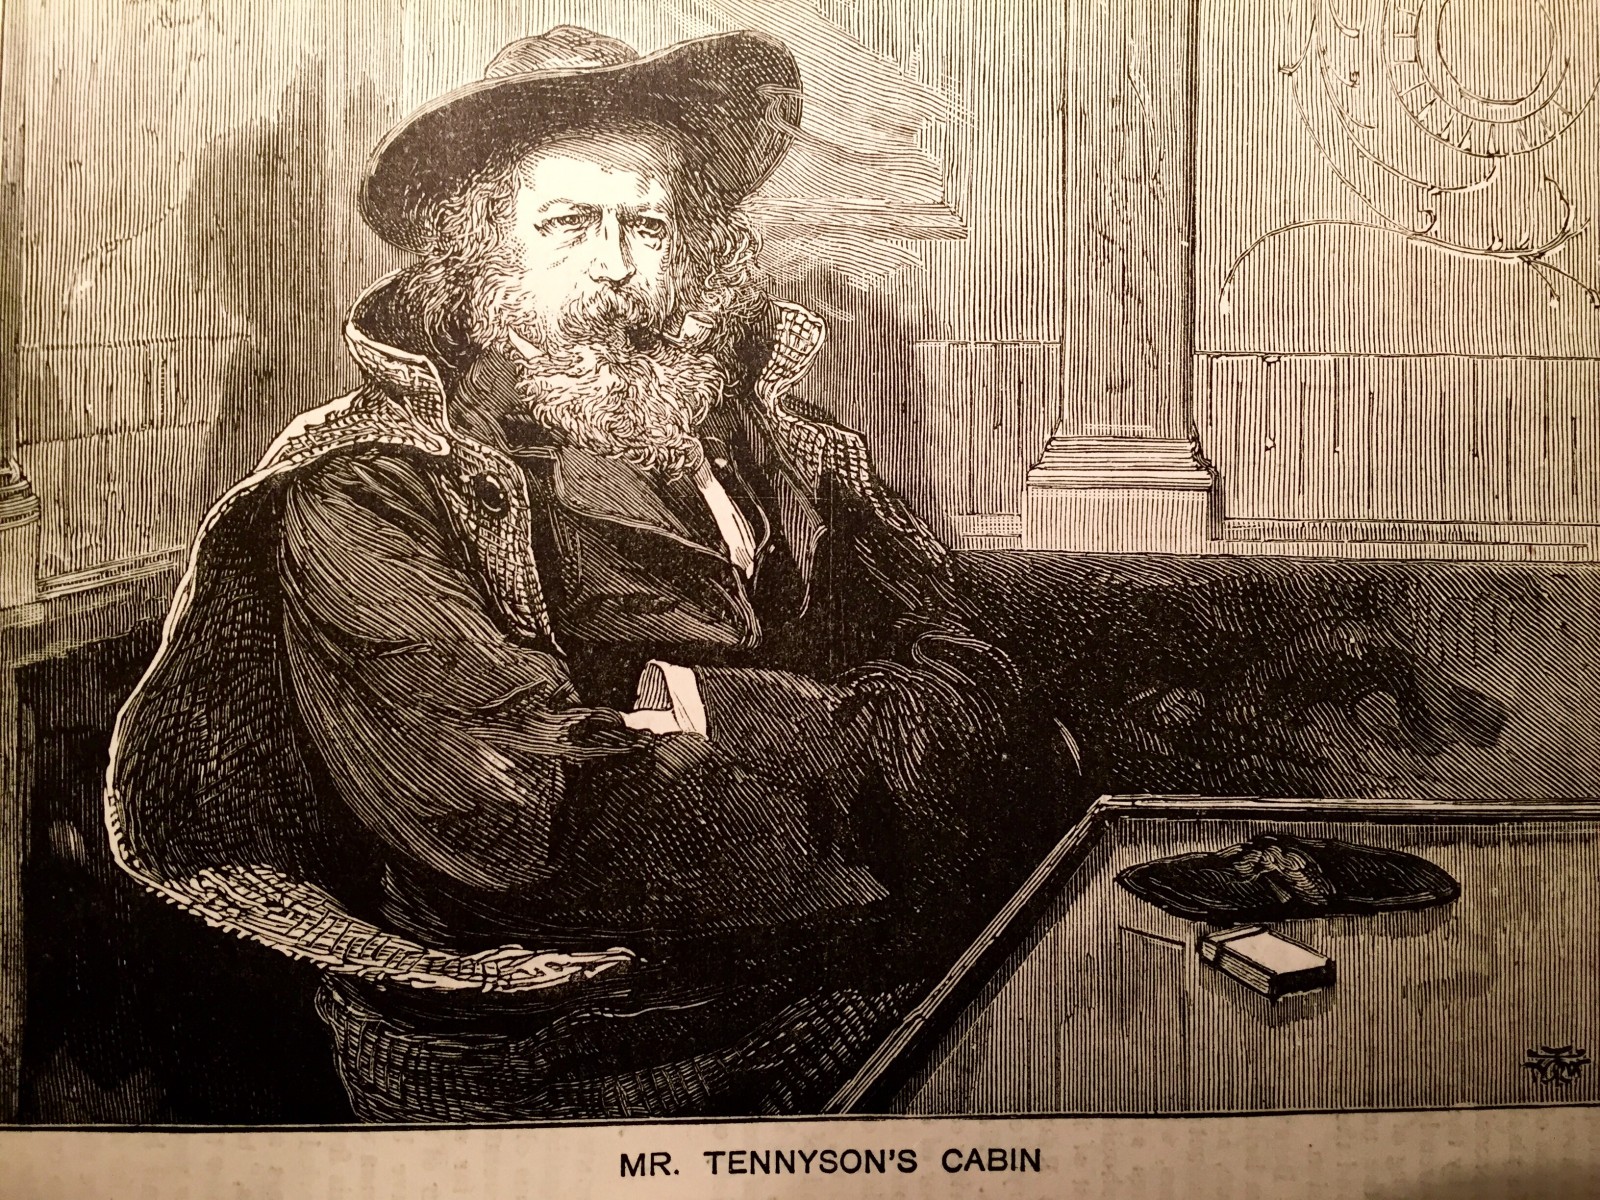 Alfred, Lord Tennyson in his cabin